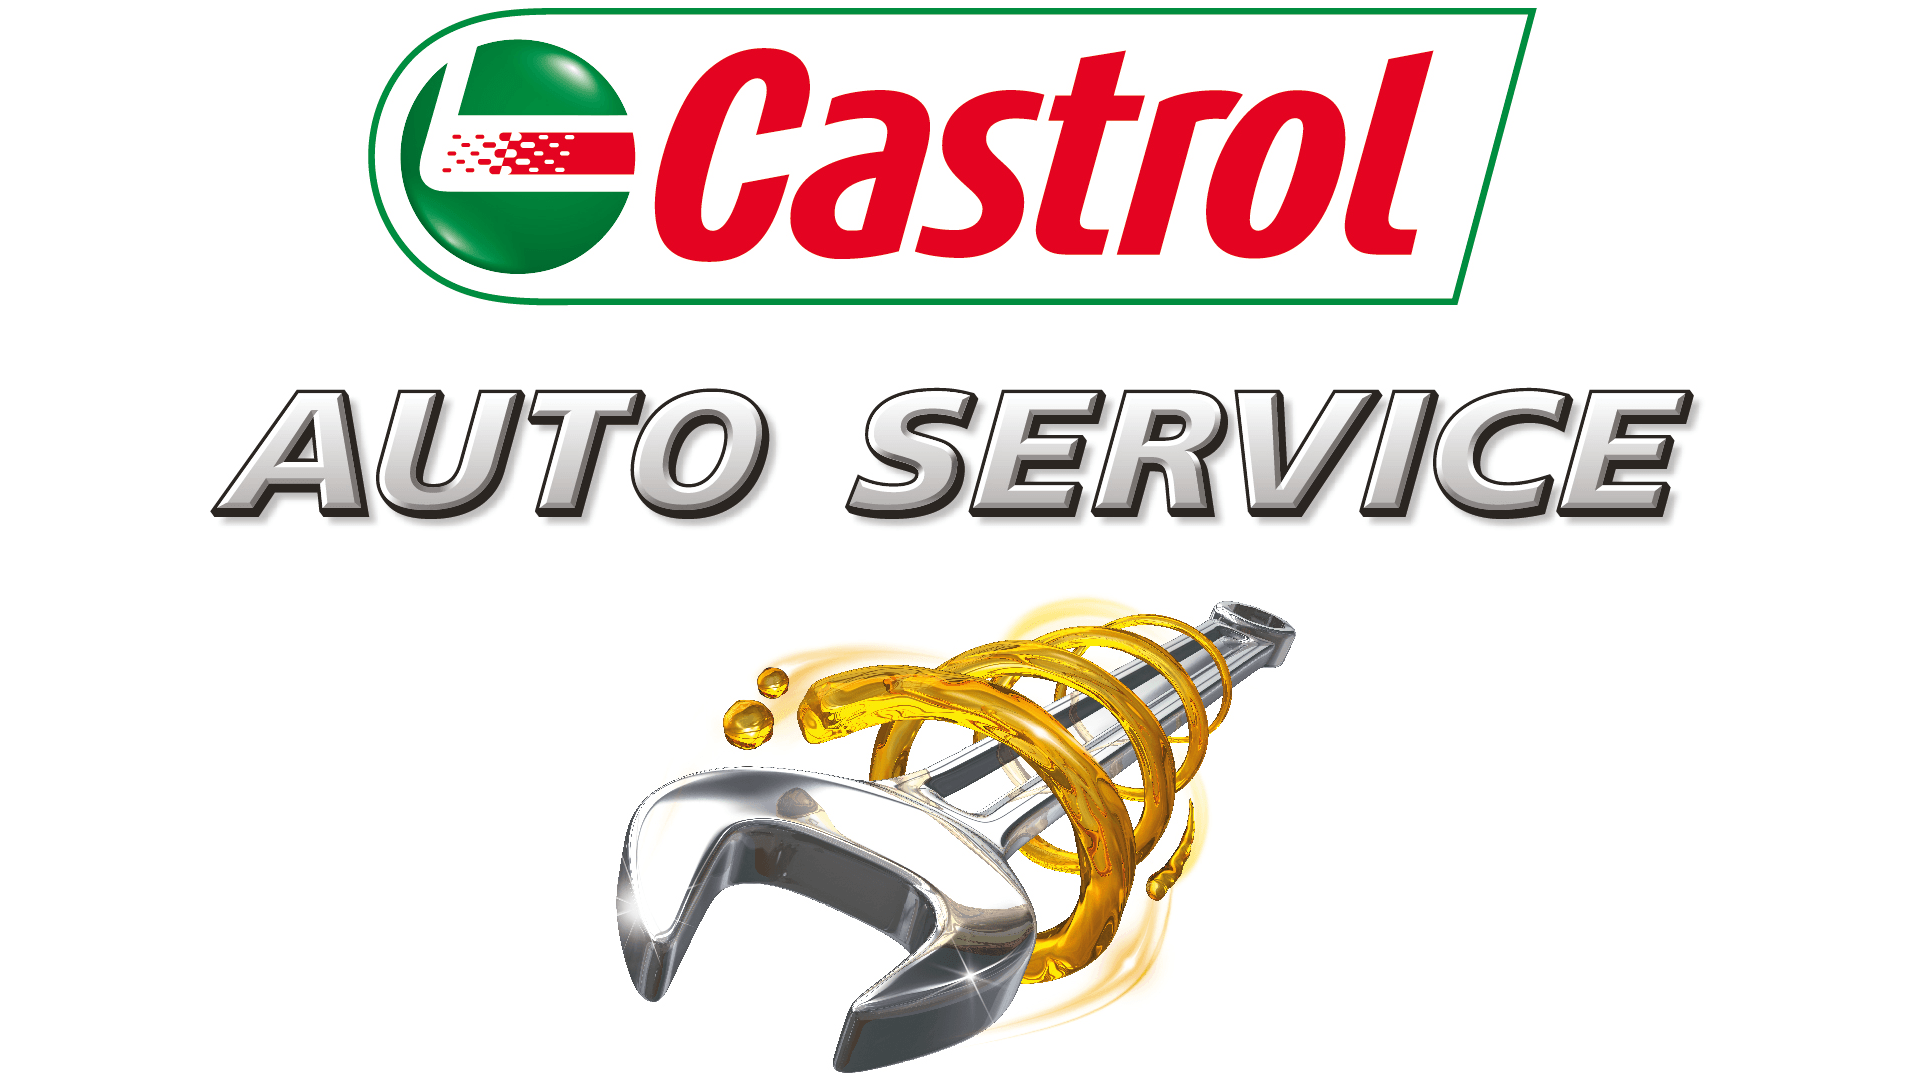 Castrol Logo - Services | Castrol Malaysia | Castrol - Motor Oil & Lubricants ...